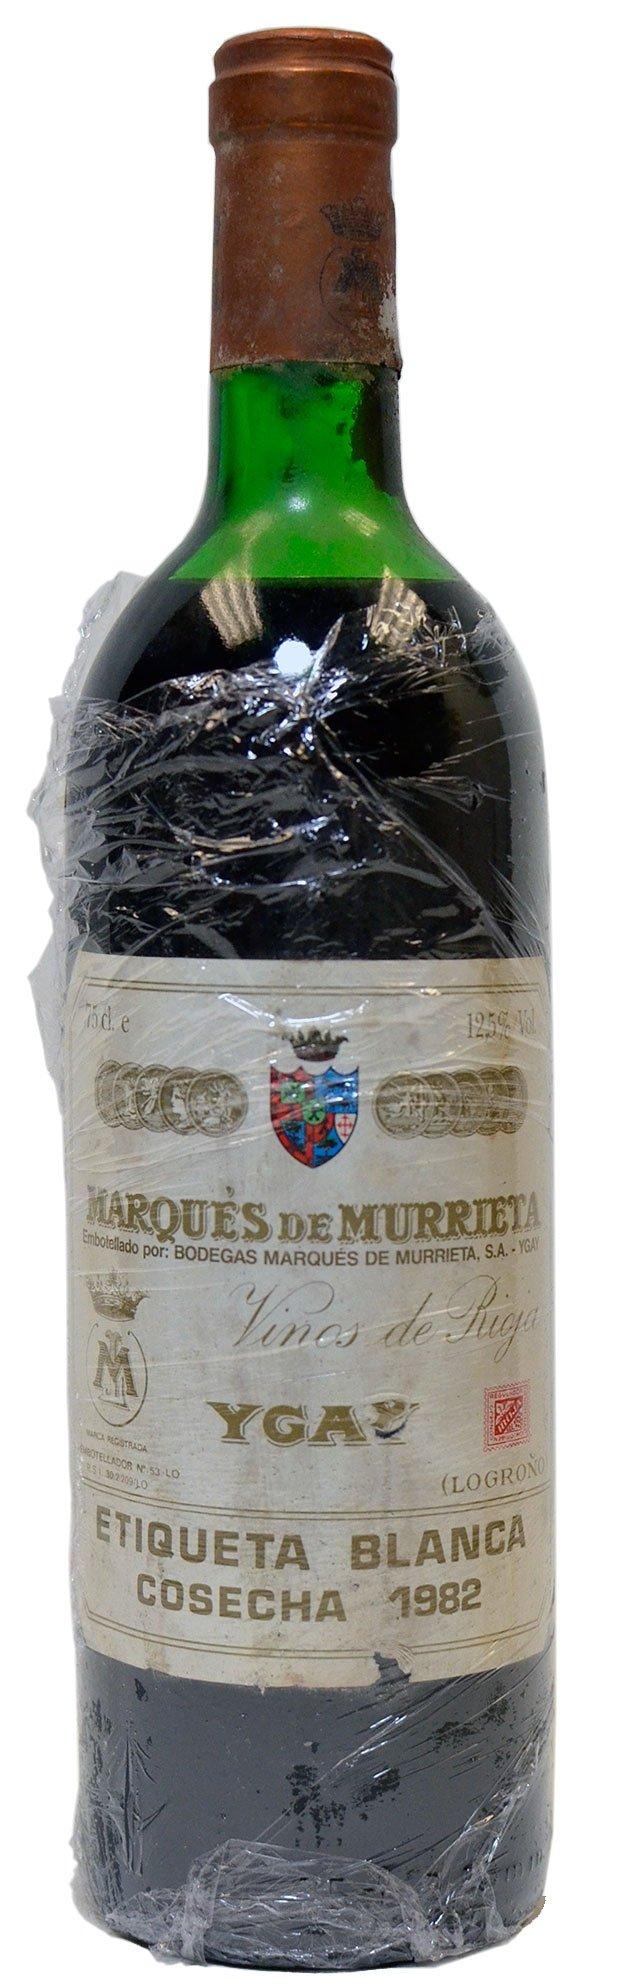 Marques de Murrieta 1982 Etiqueta Blanca, Rioja